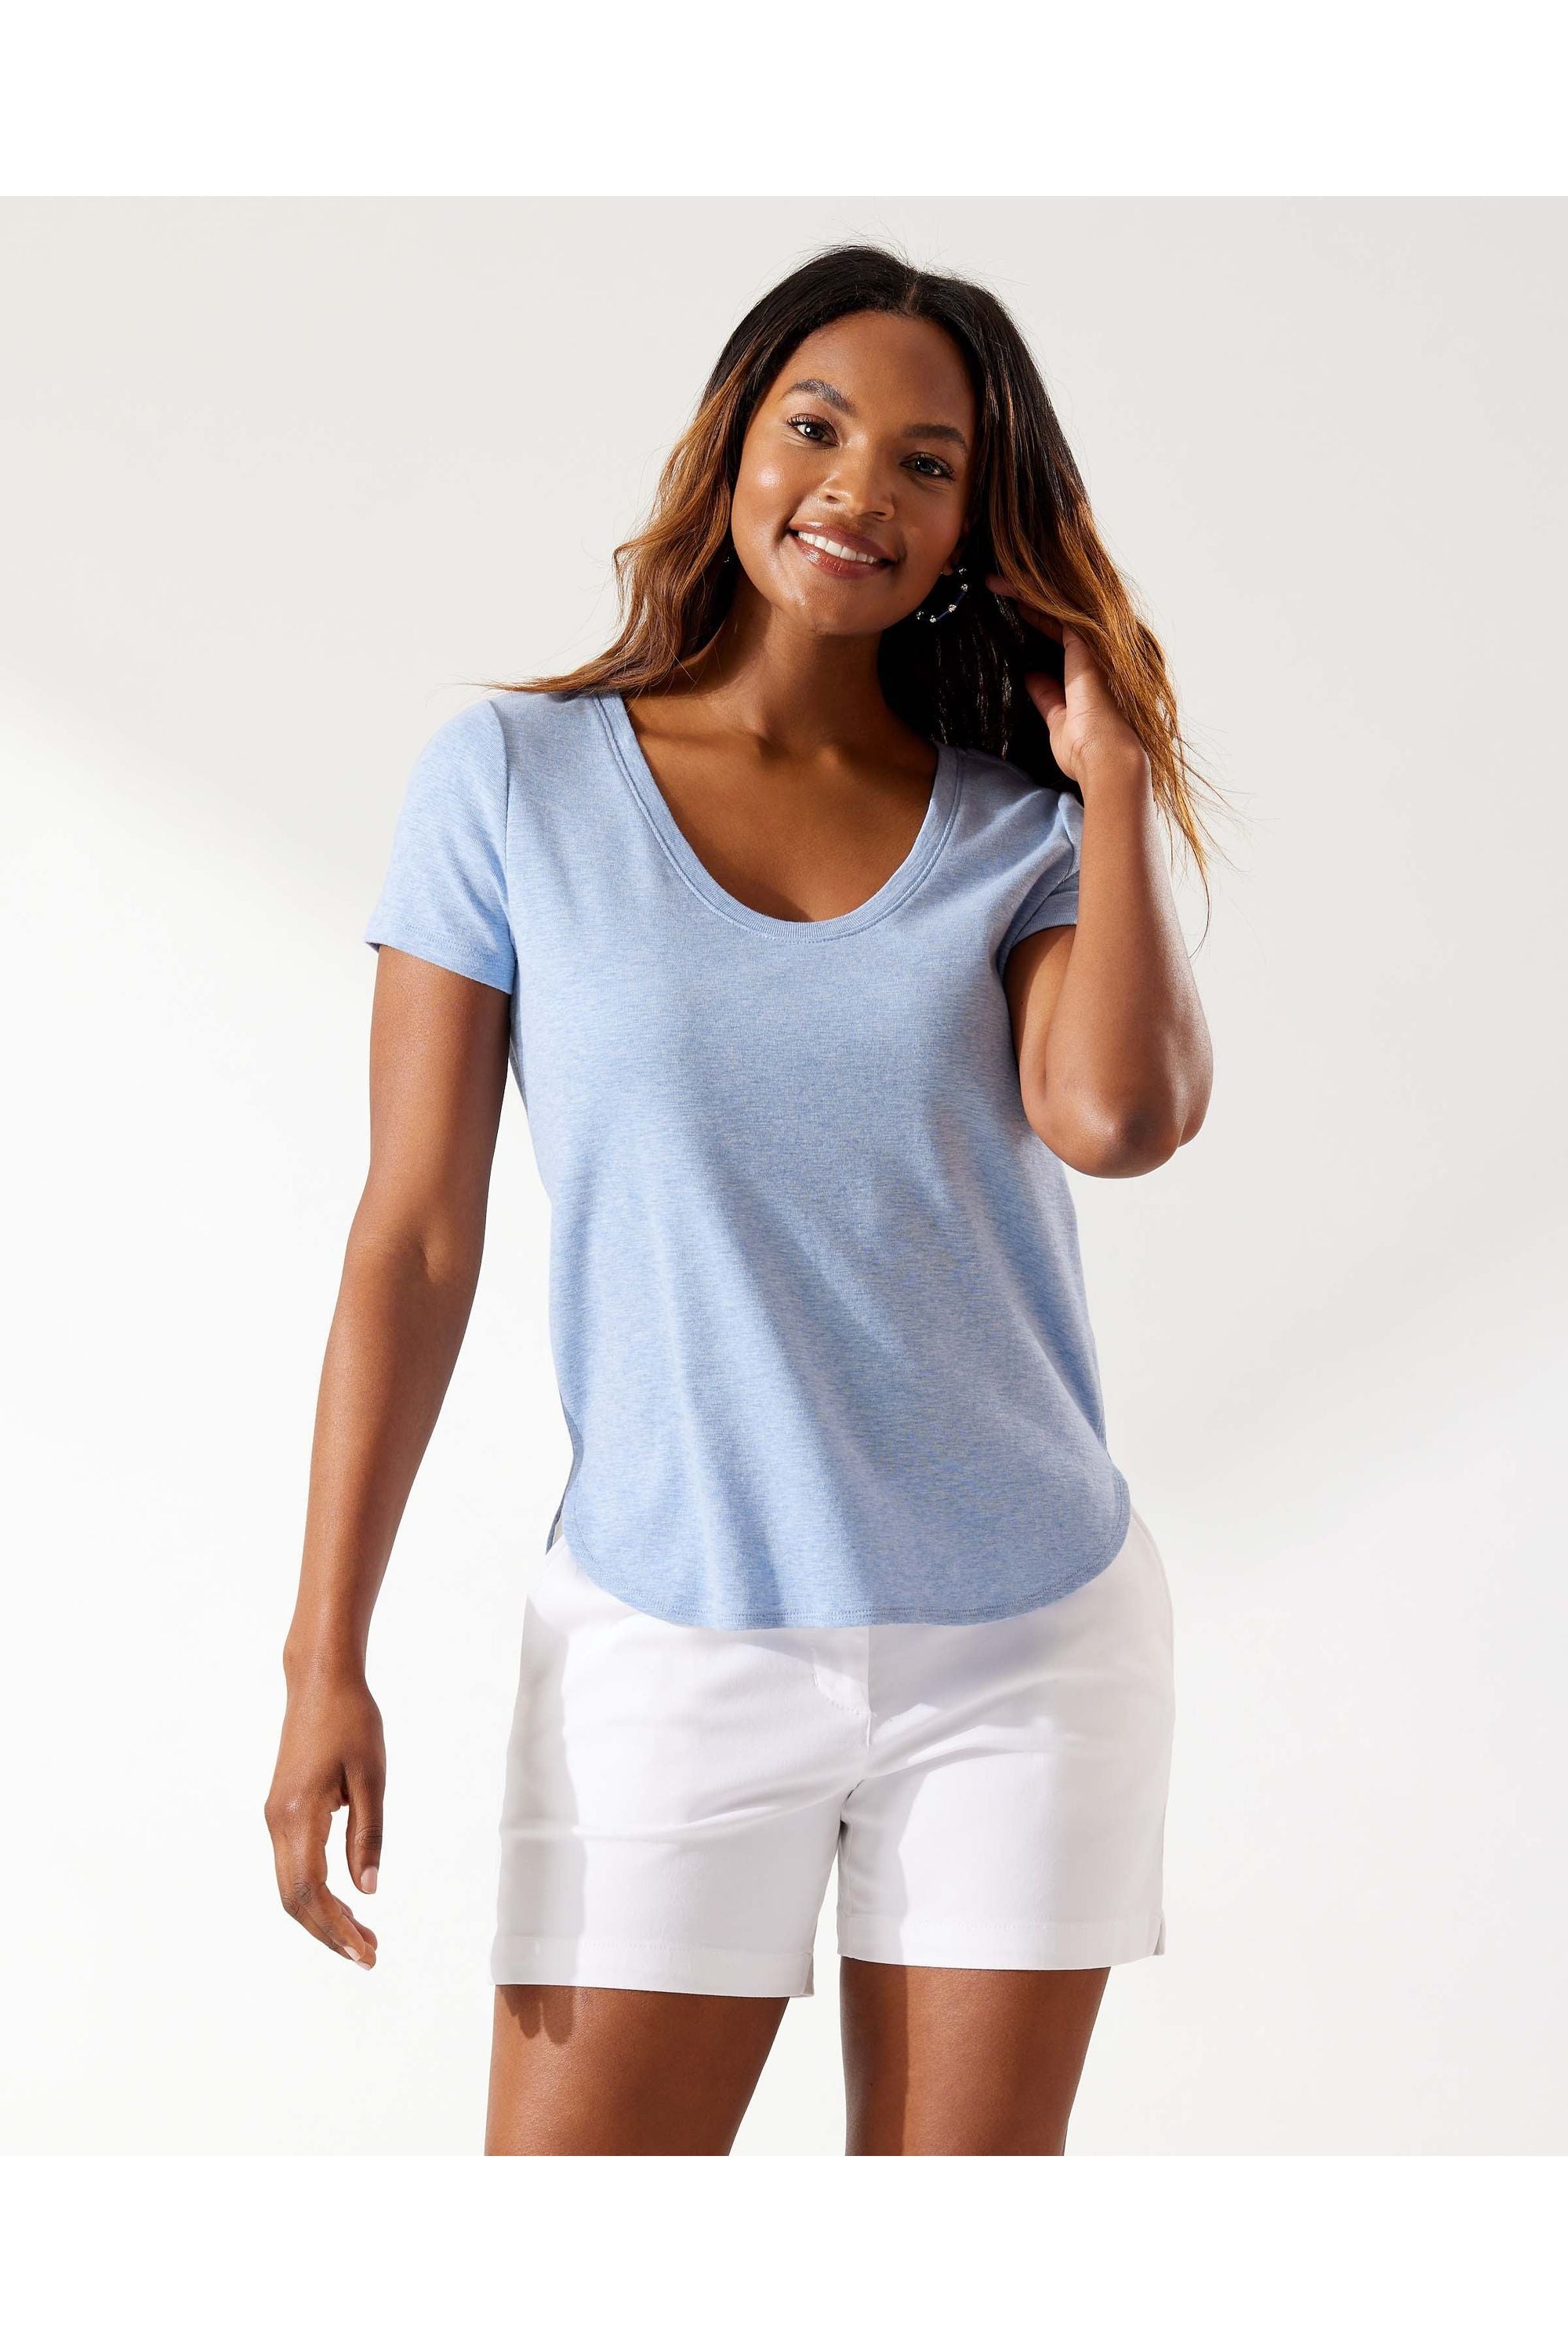 Tommy Bahama Ashby Short-Sleeve T-Shirt - Style SW221034, light sky heather, front